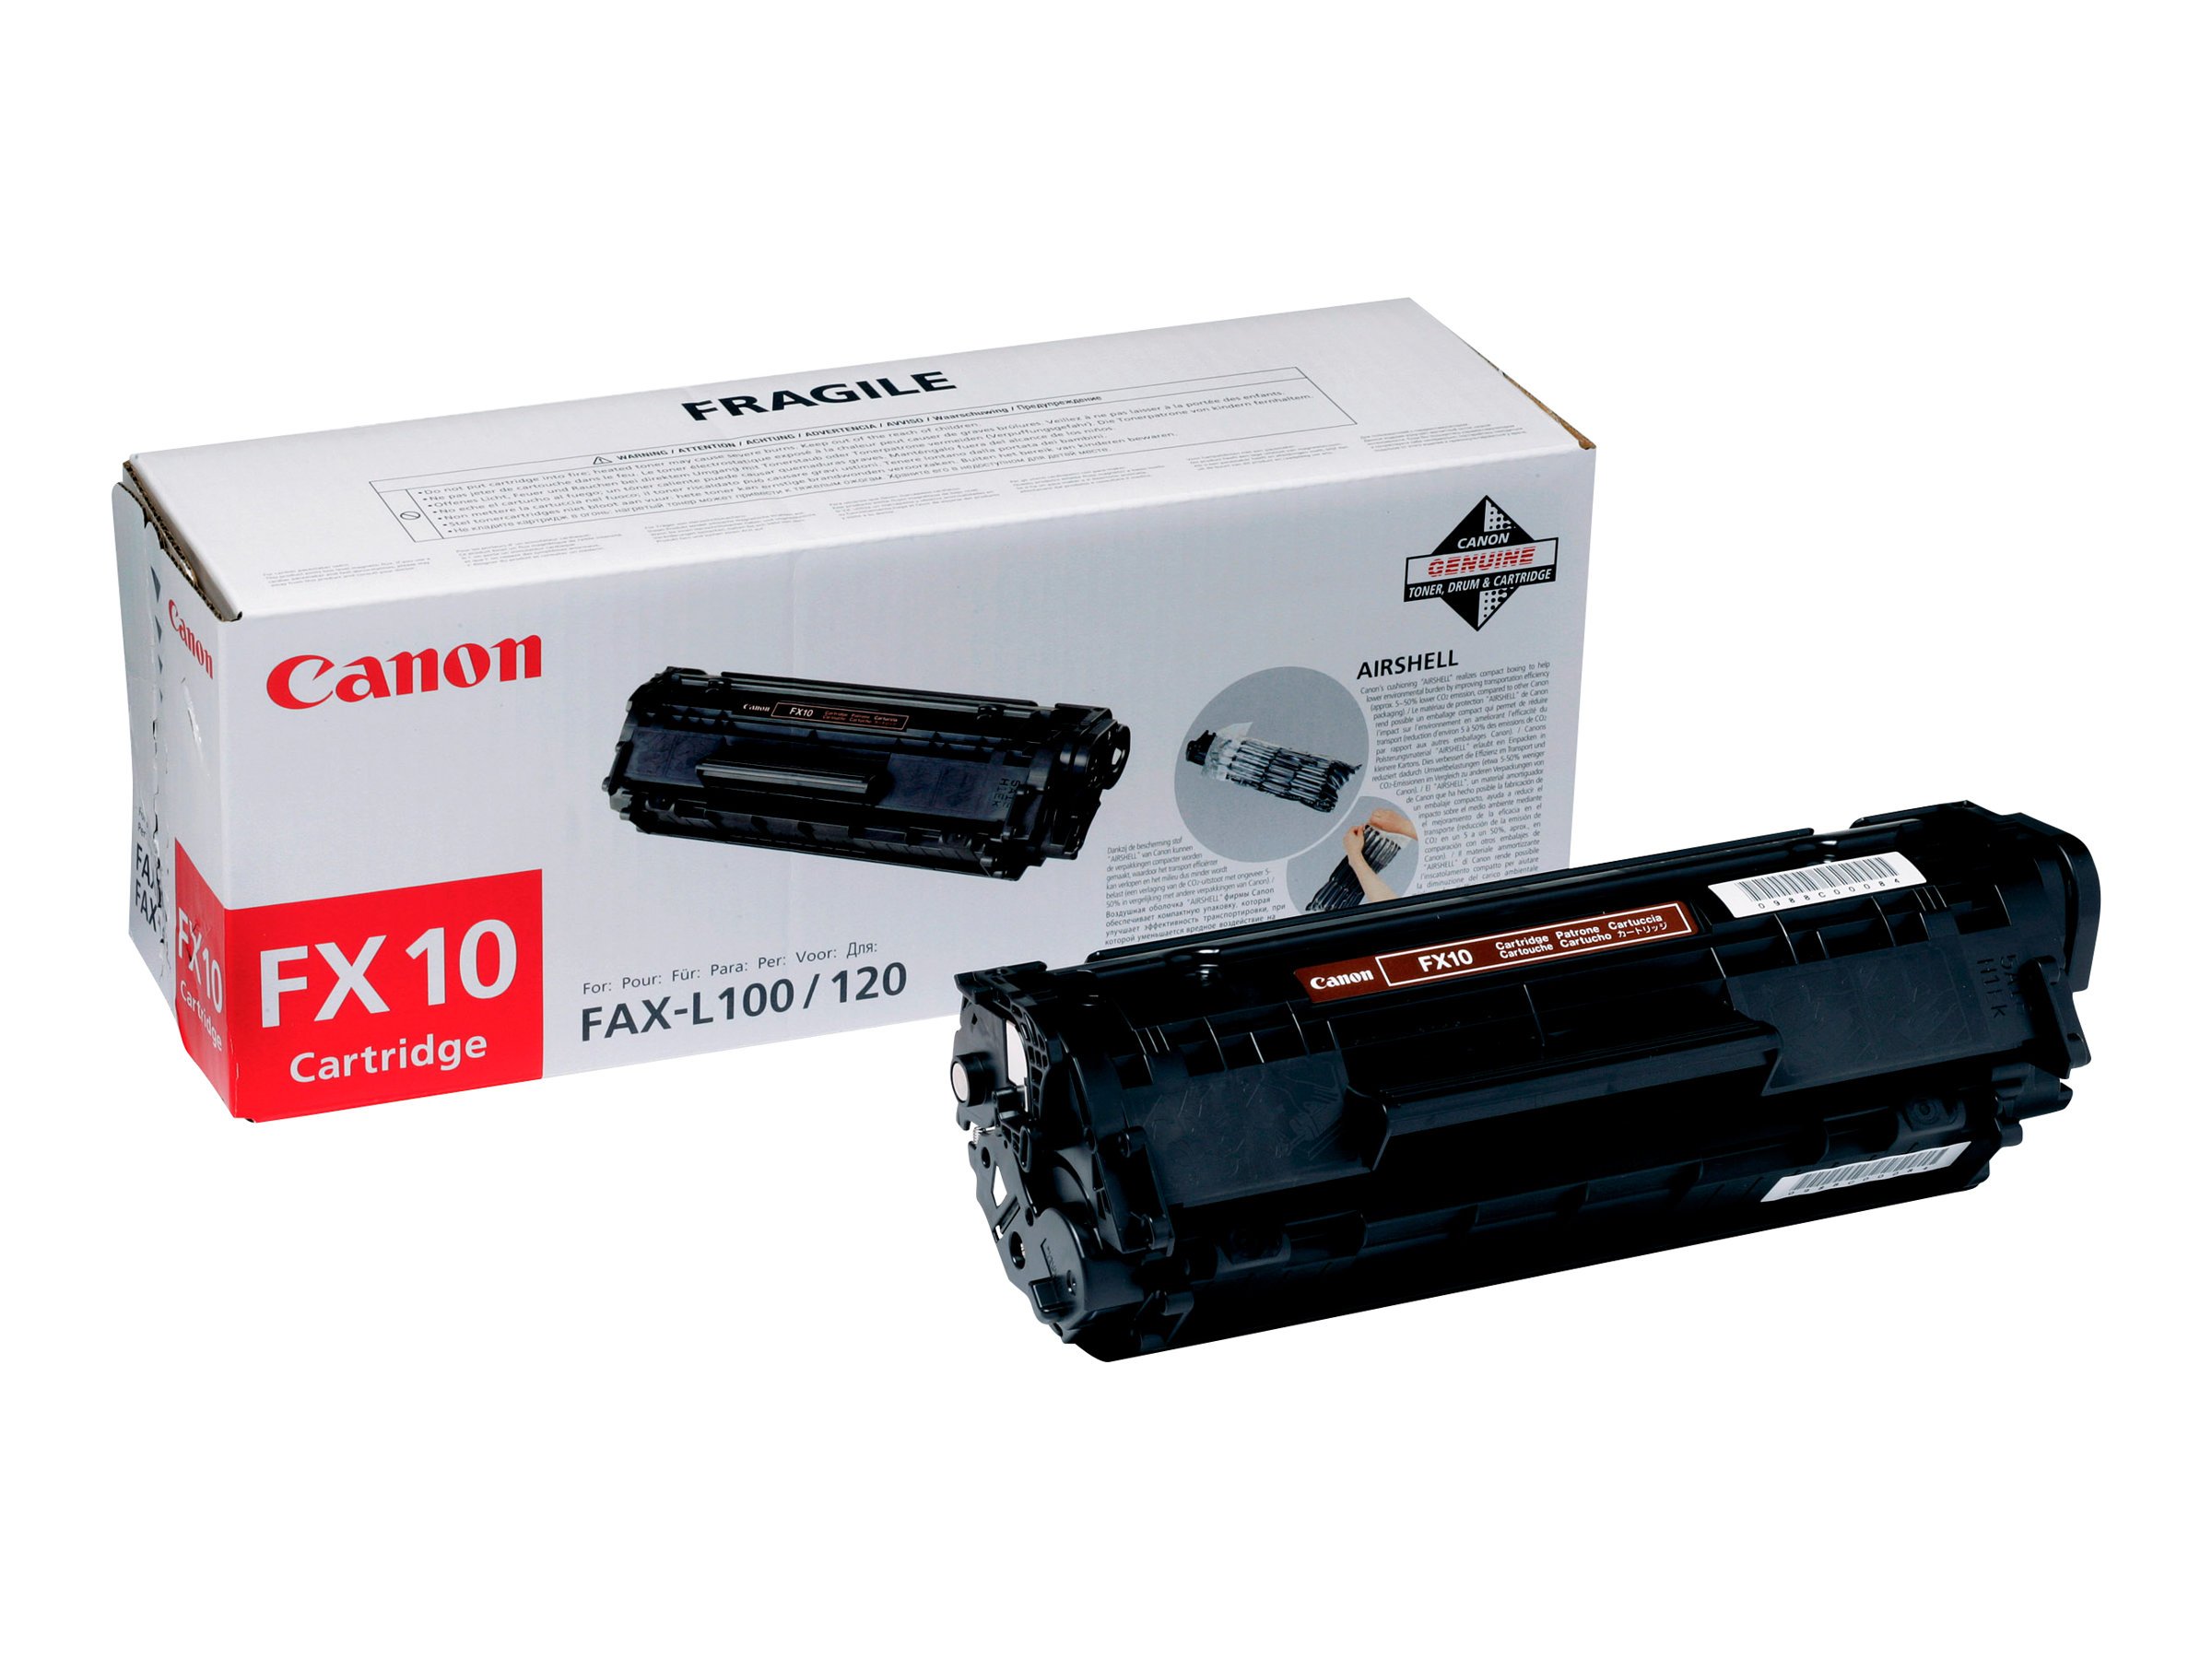 Verdikken koppel appel Canon FX-10 - Black - original | Toner Cartridges | Supplies | EEESHOP.net:  PCs, Notebooks, Cameras, Appliances, Drones, Toys.